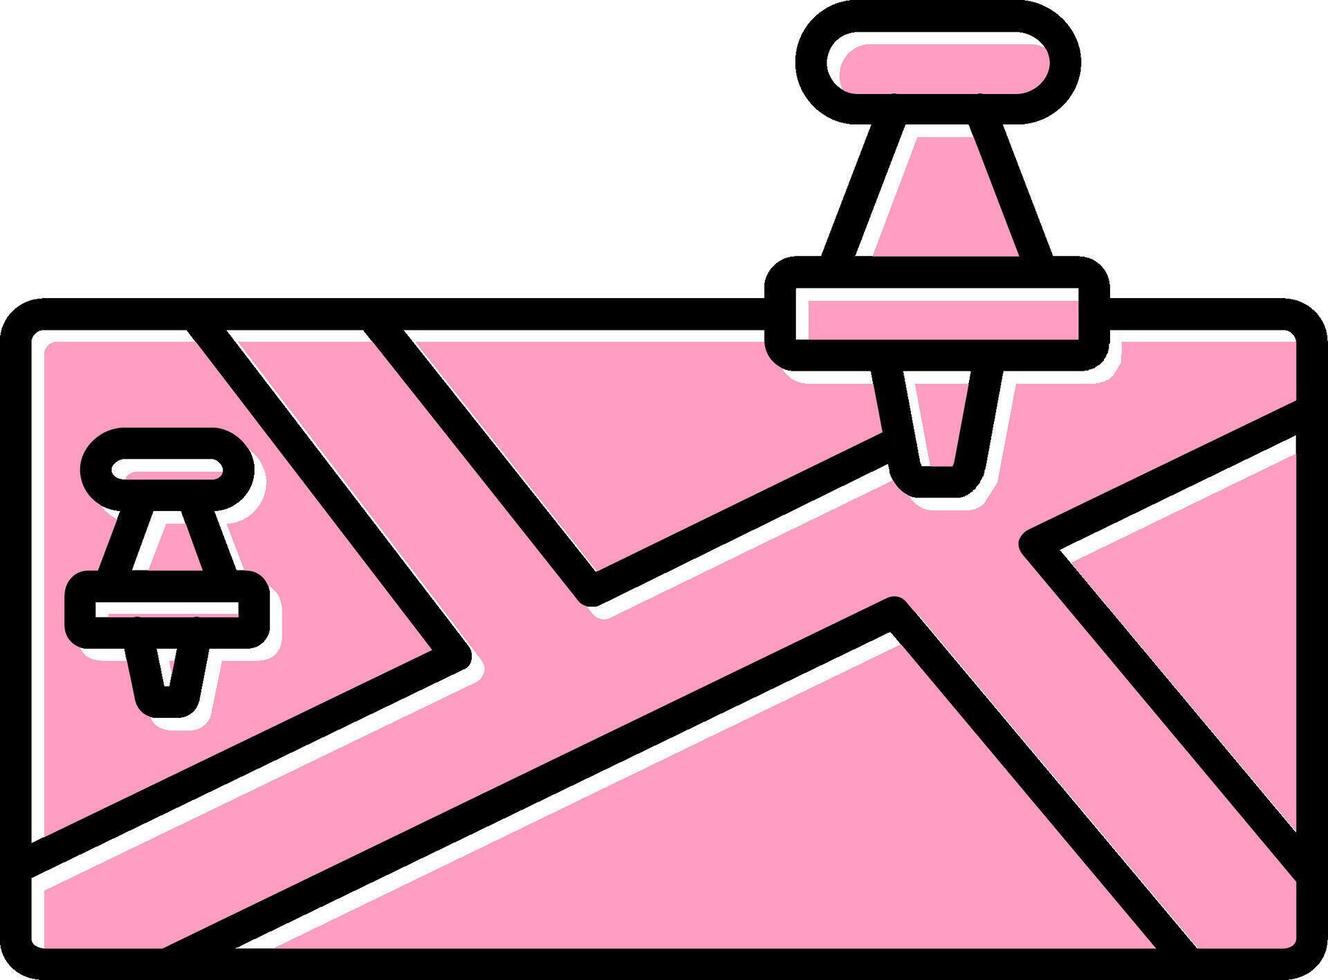 punaise vector pictogram